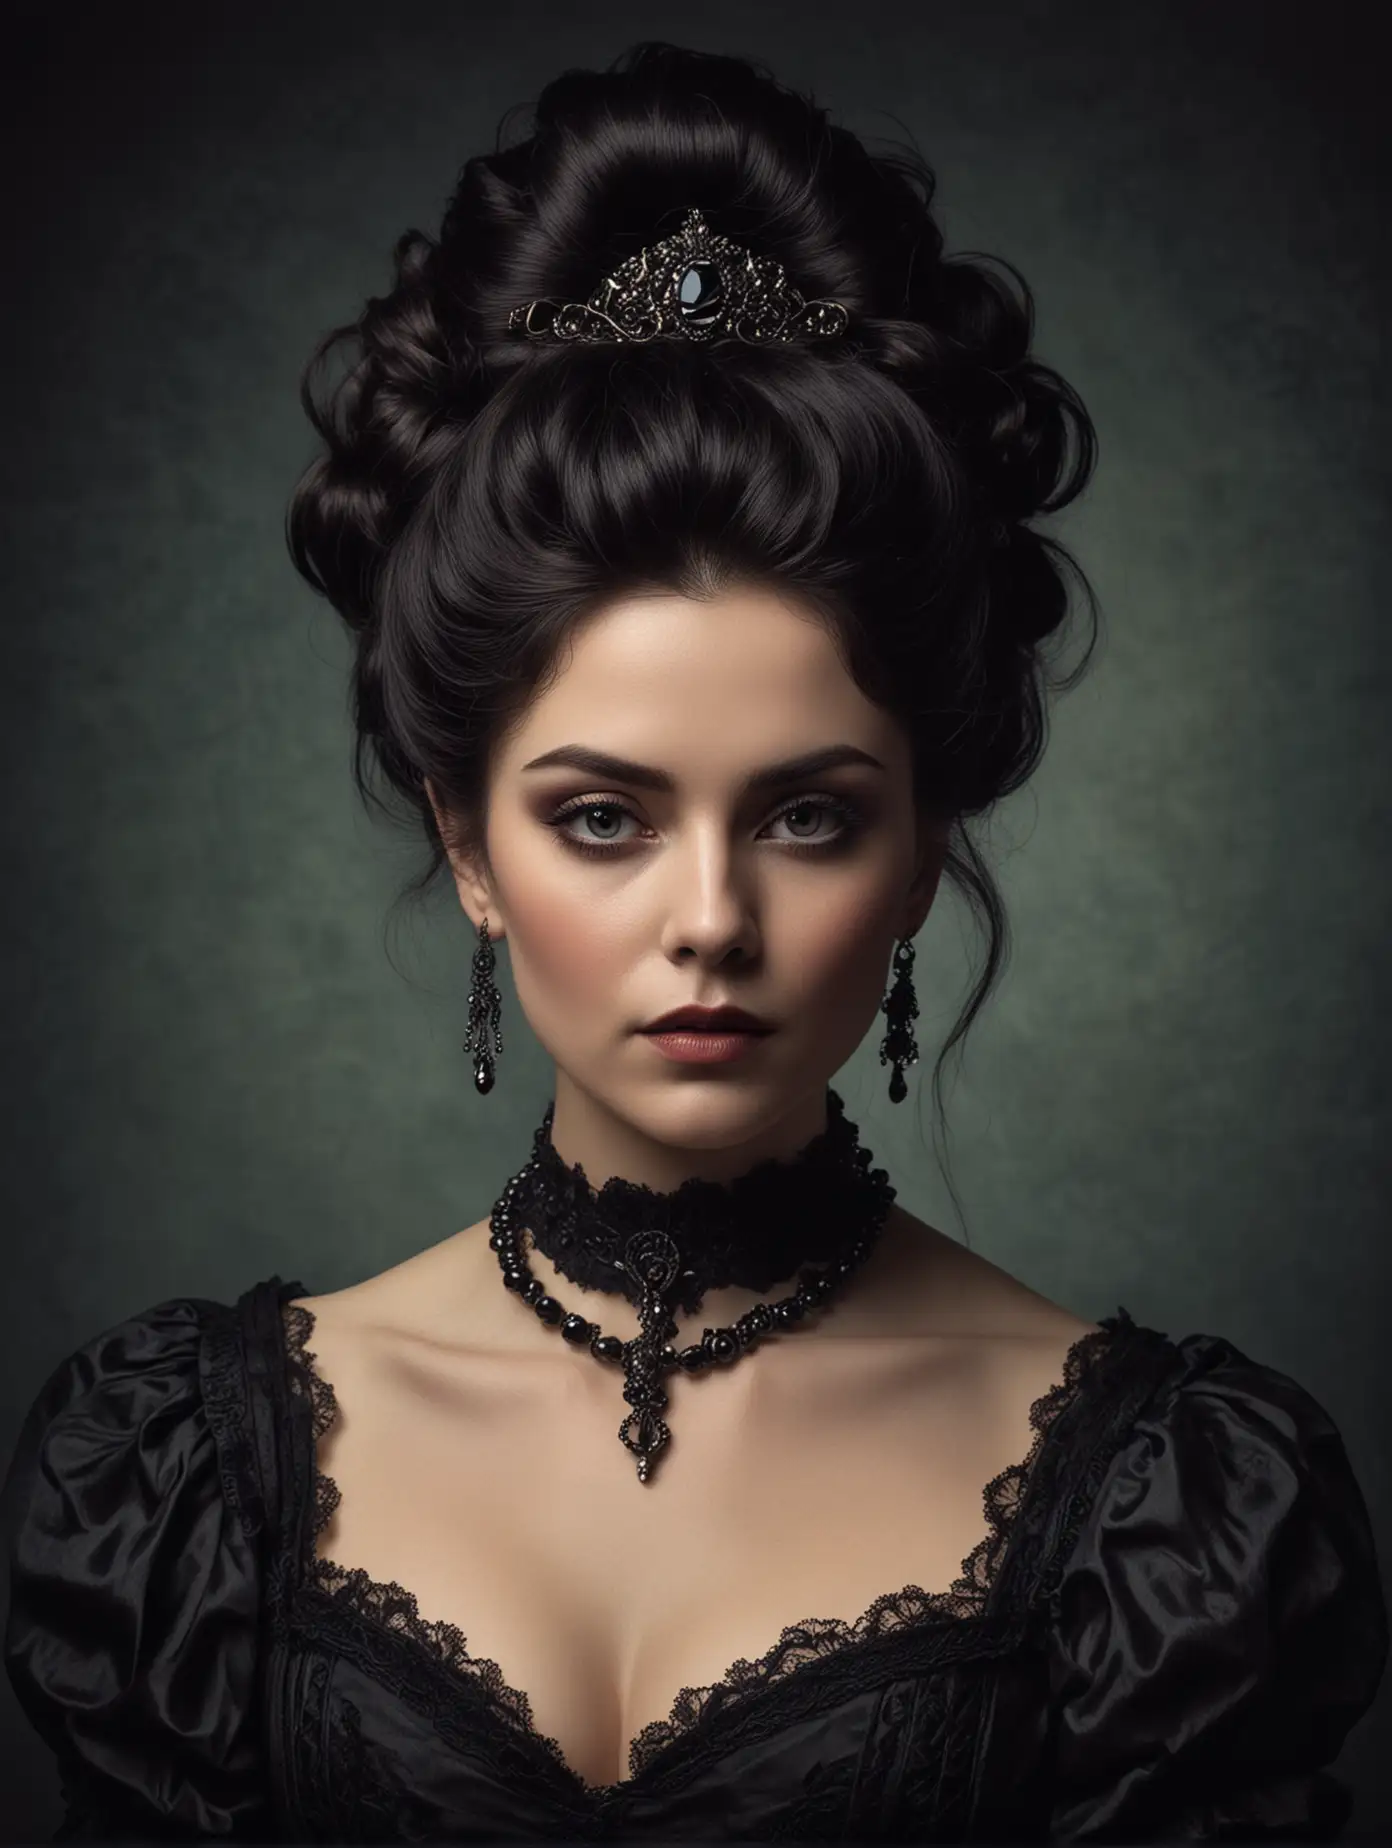 Beautiful Victorian era woman portrait, dark hair in voluminous updo, dark jewelry, gothic vibe